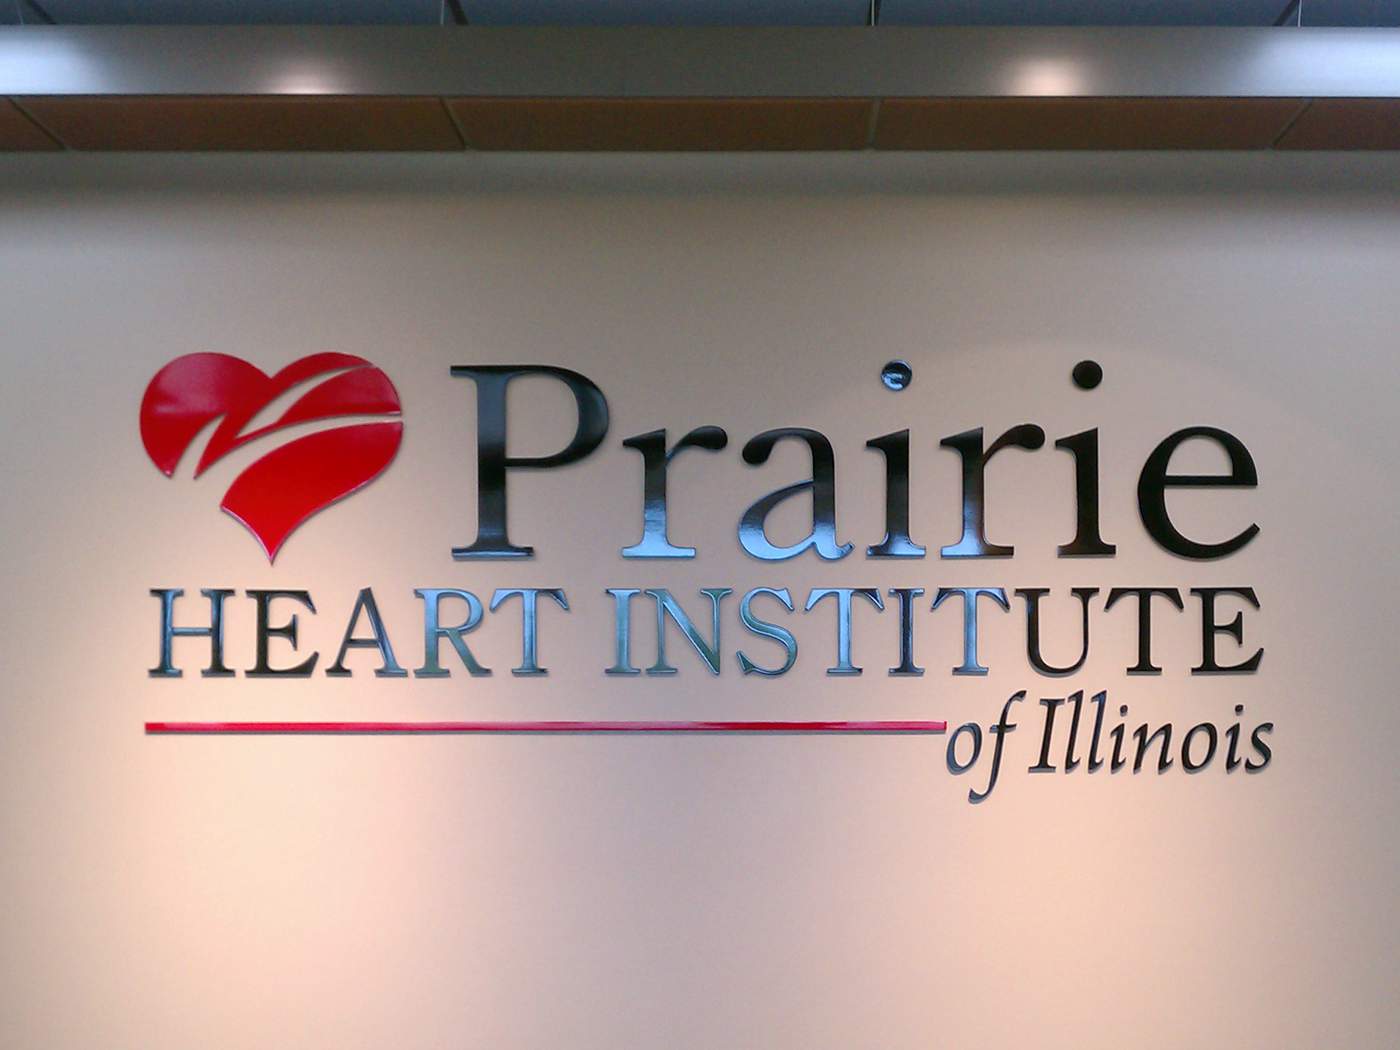 Custom Acrylic Signage for Prairie Heart Institute - Decatur, IL